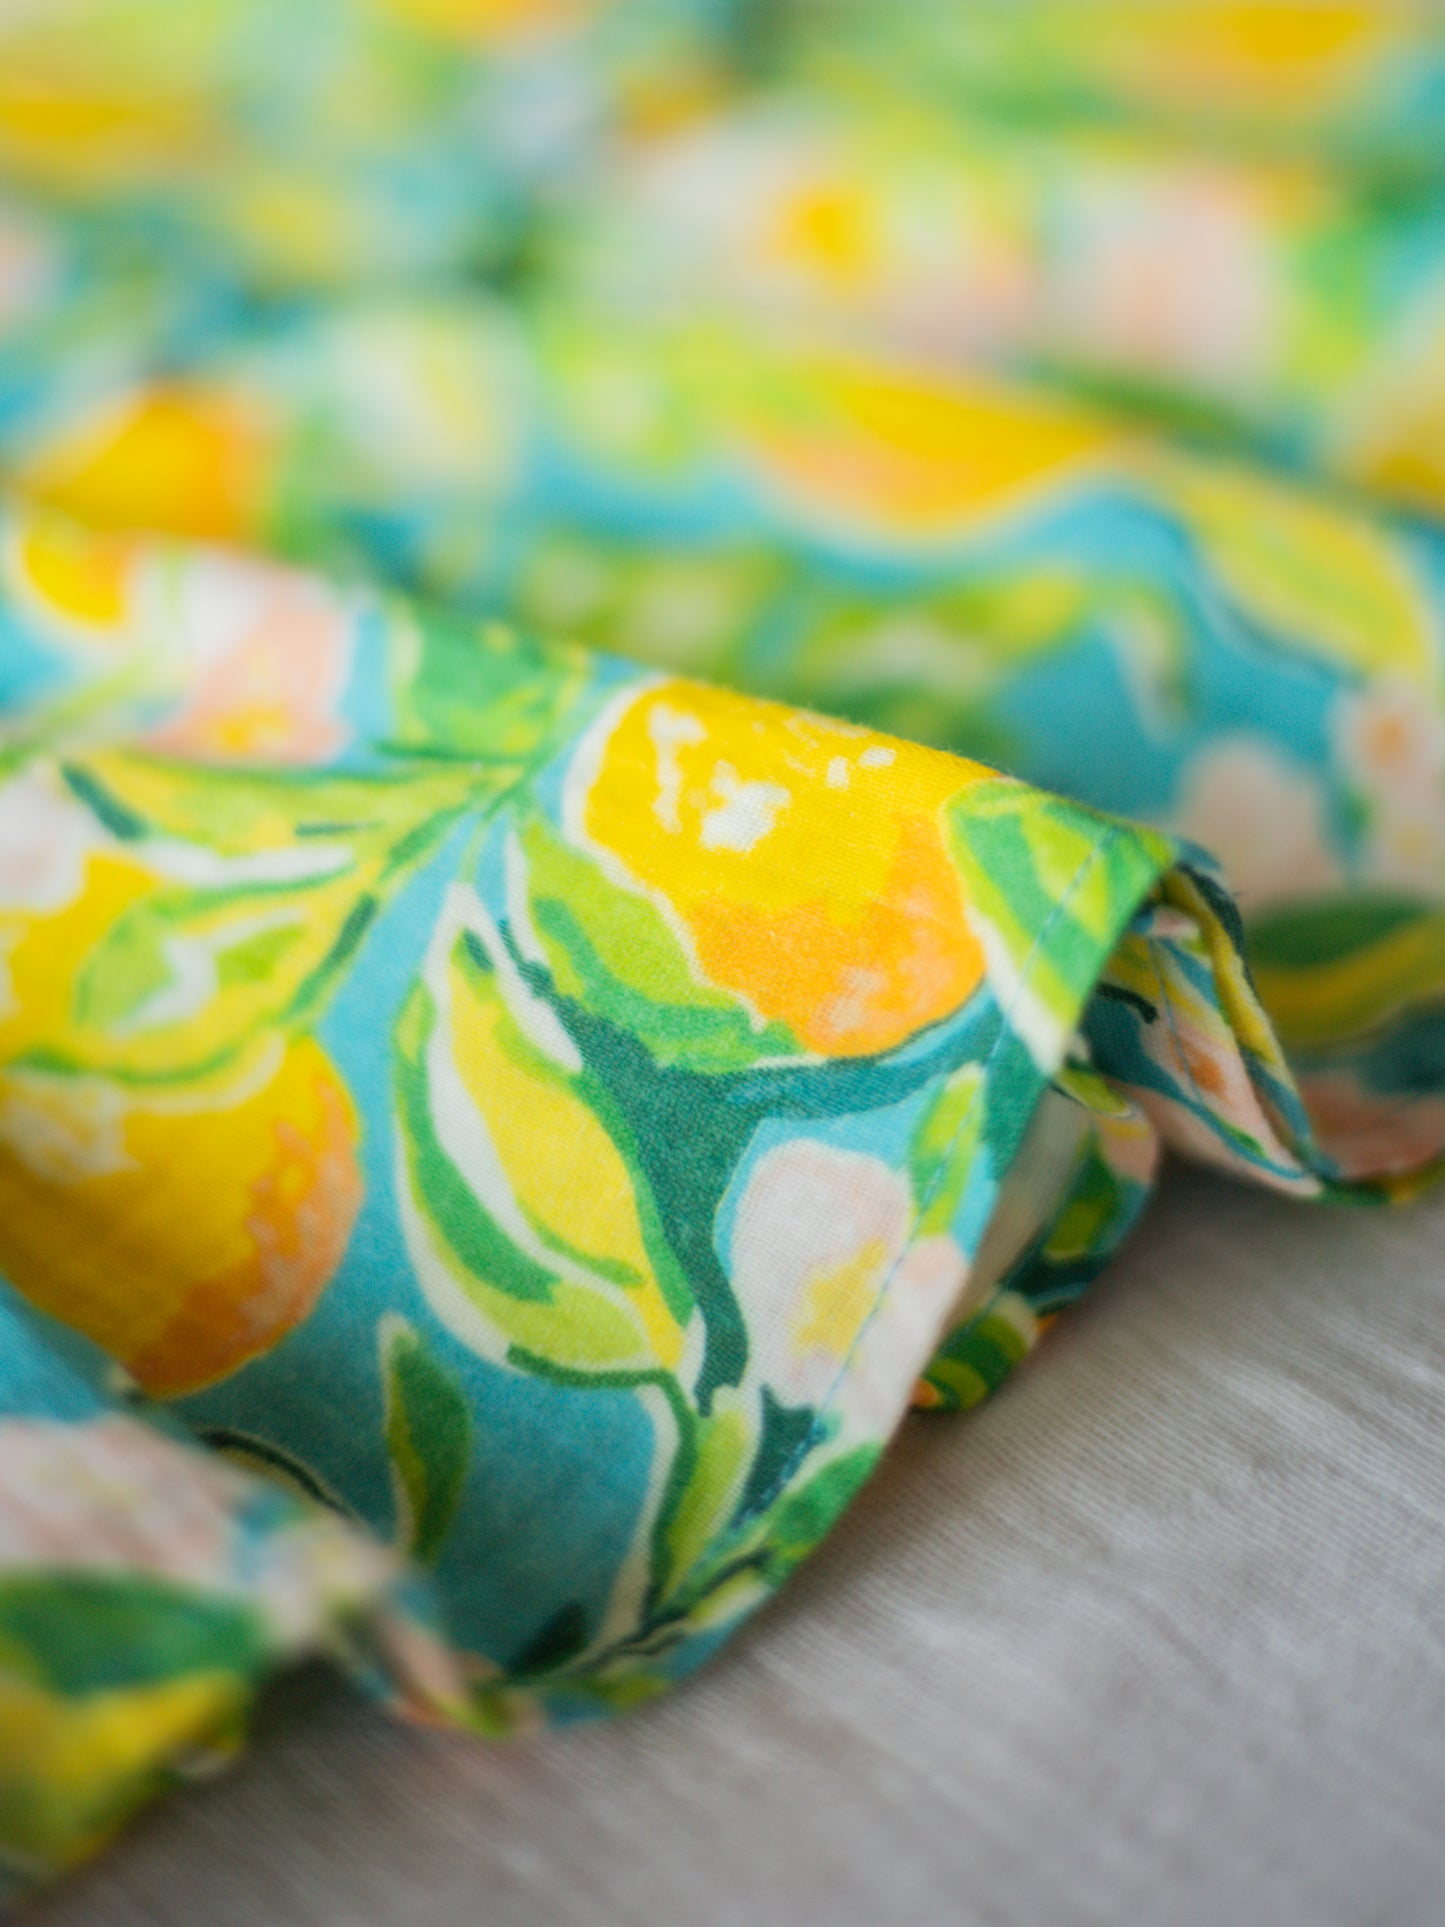 Beach Dress - Bright Lemon Floral